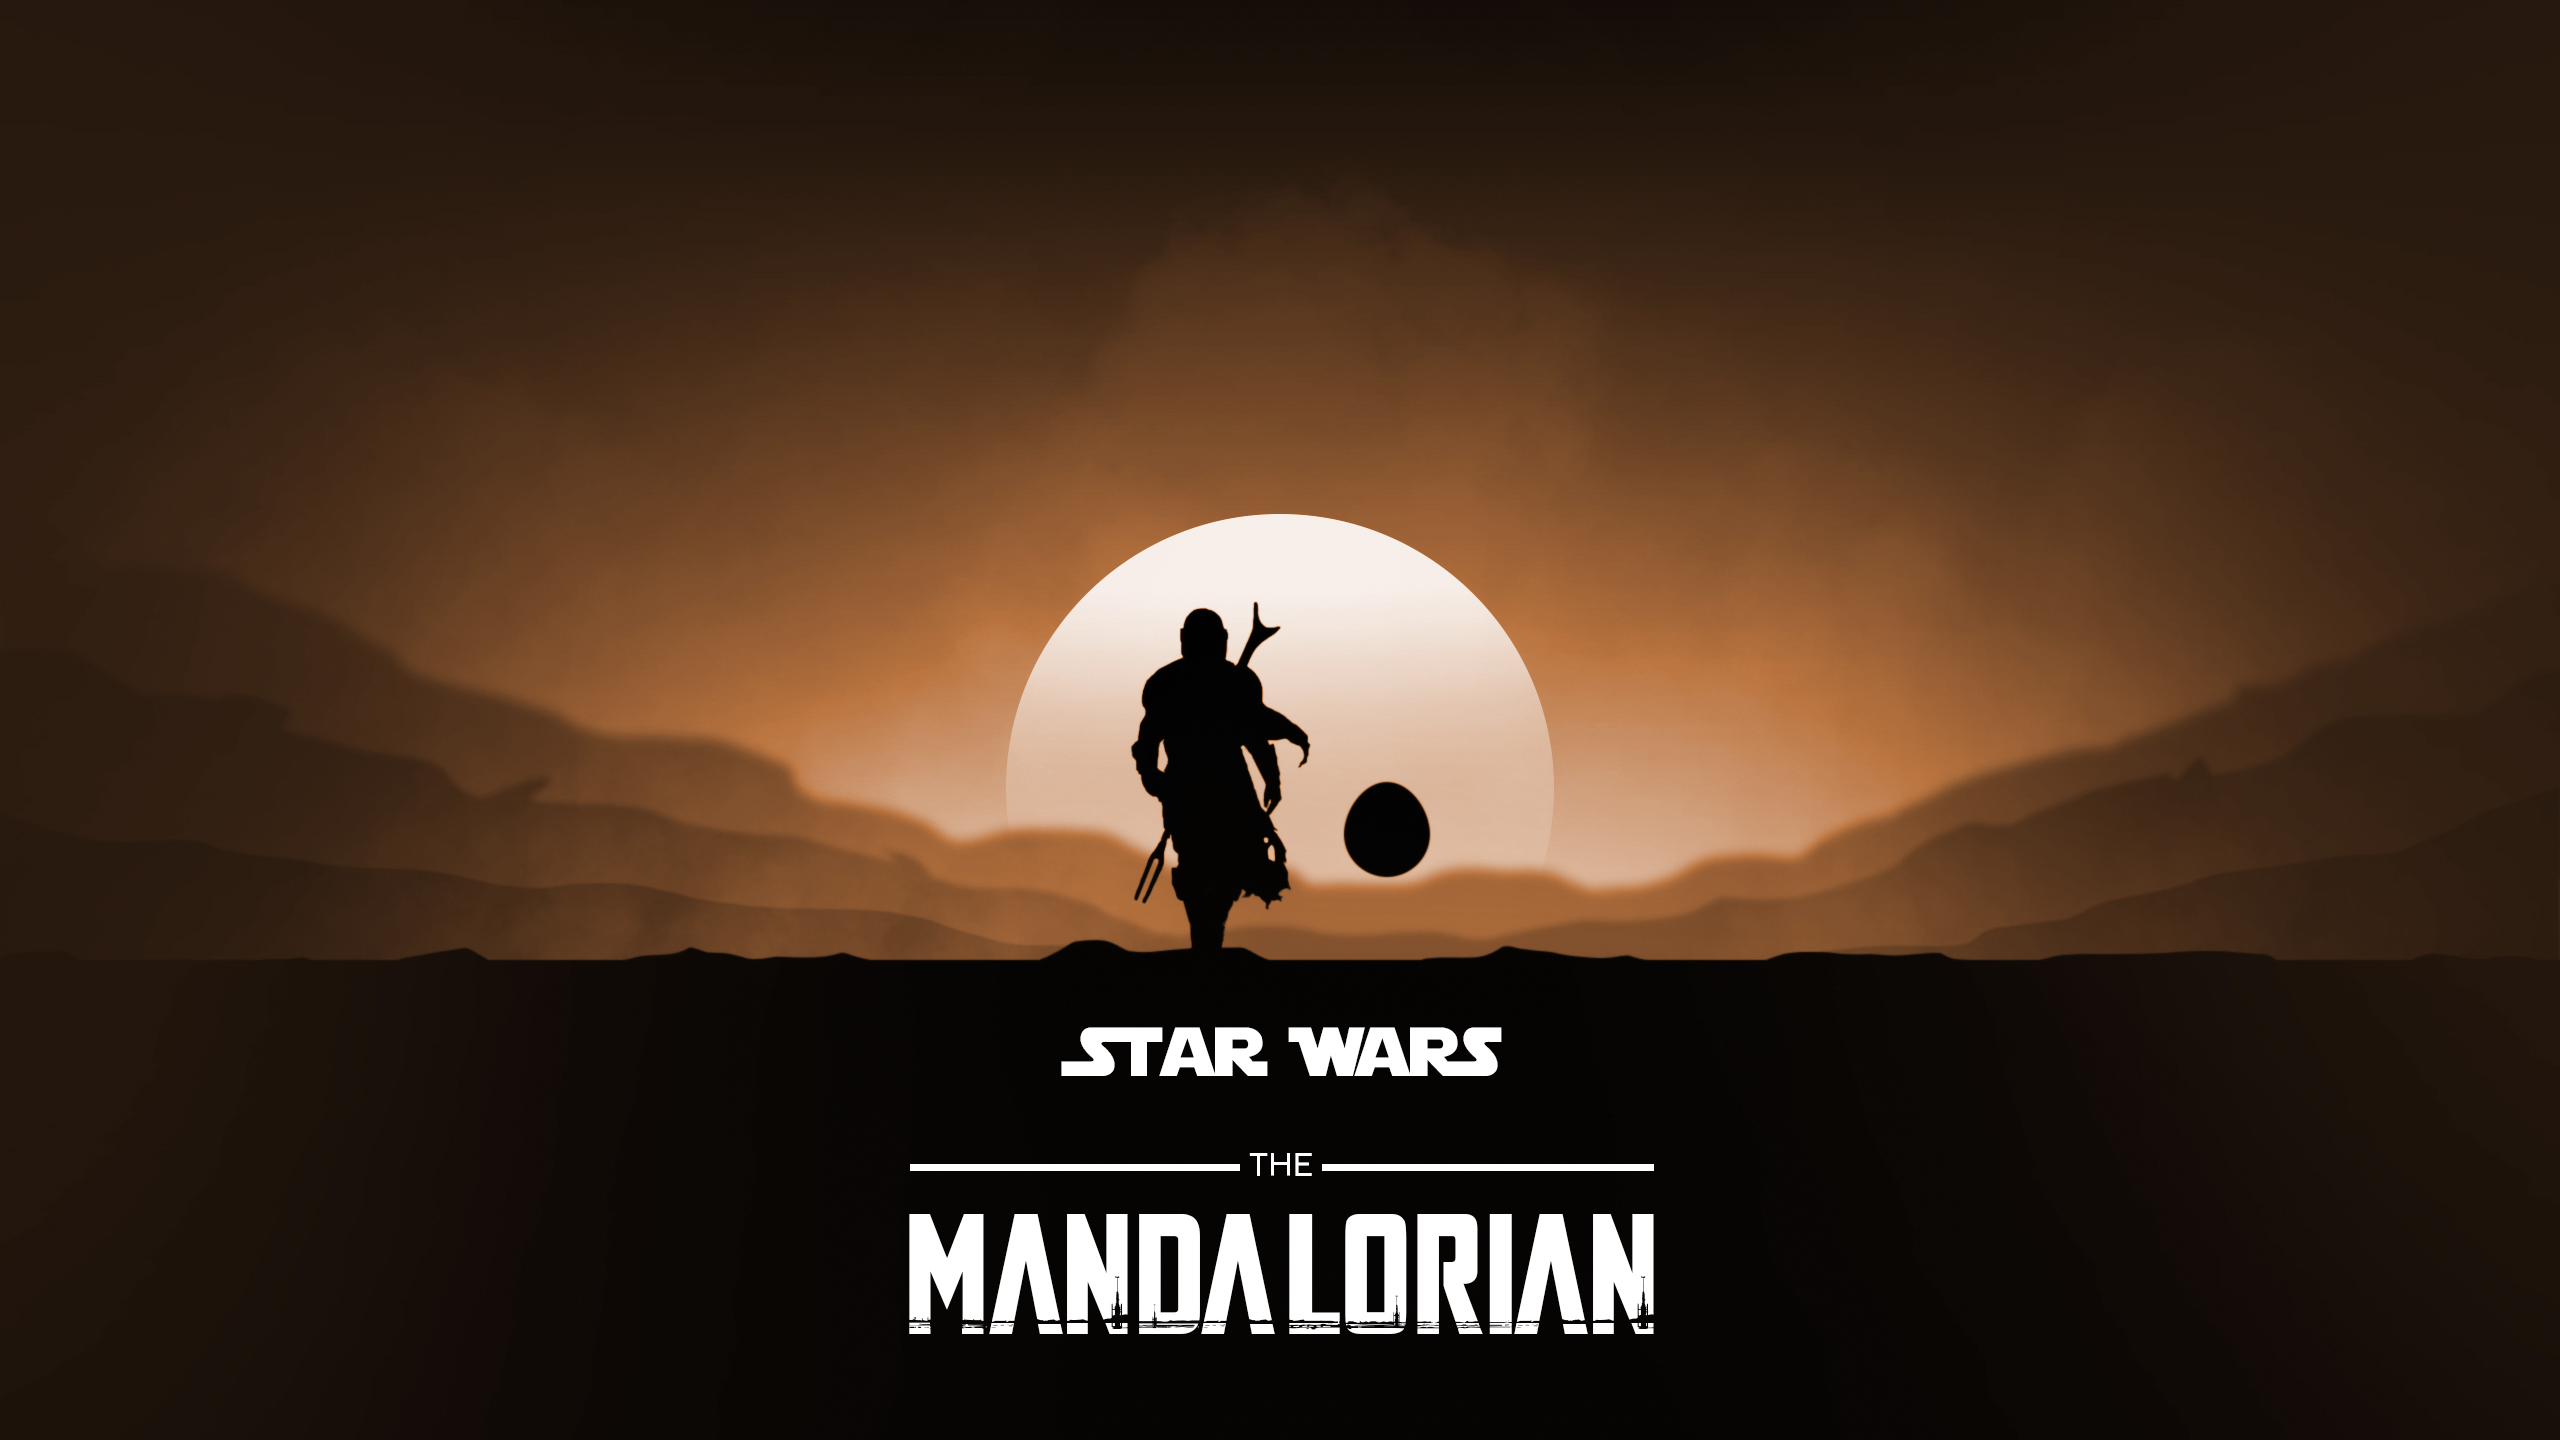 The Mandalorian 2020 Wallpapers